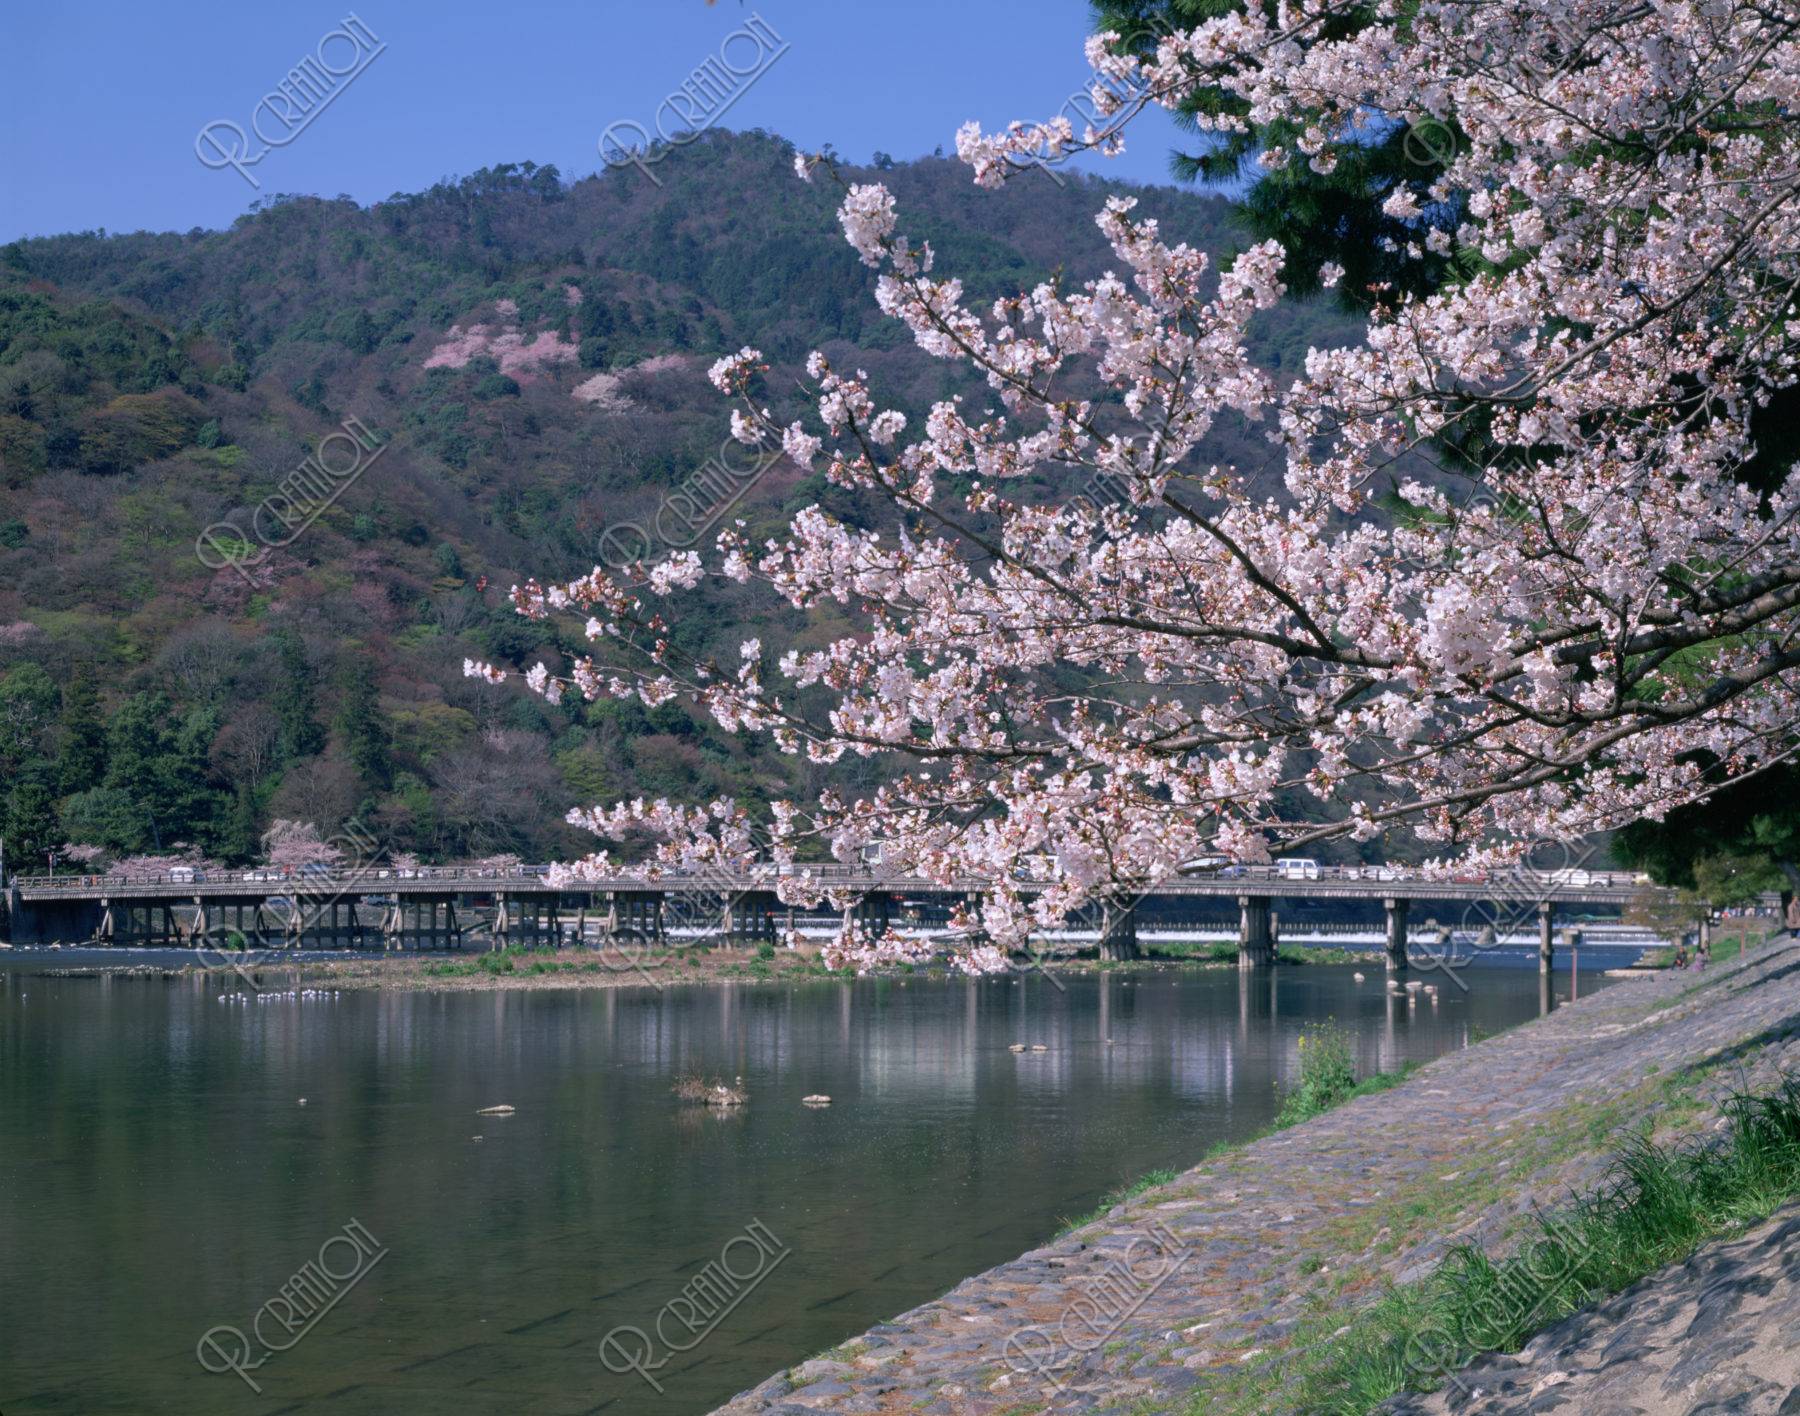 嵐山 渡月橋の桜